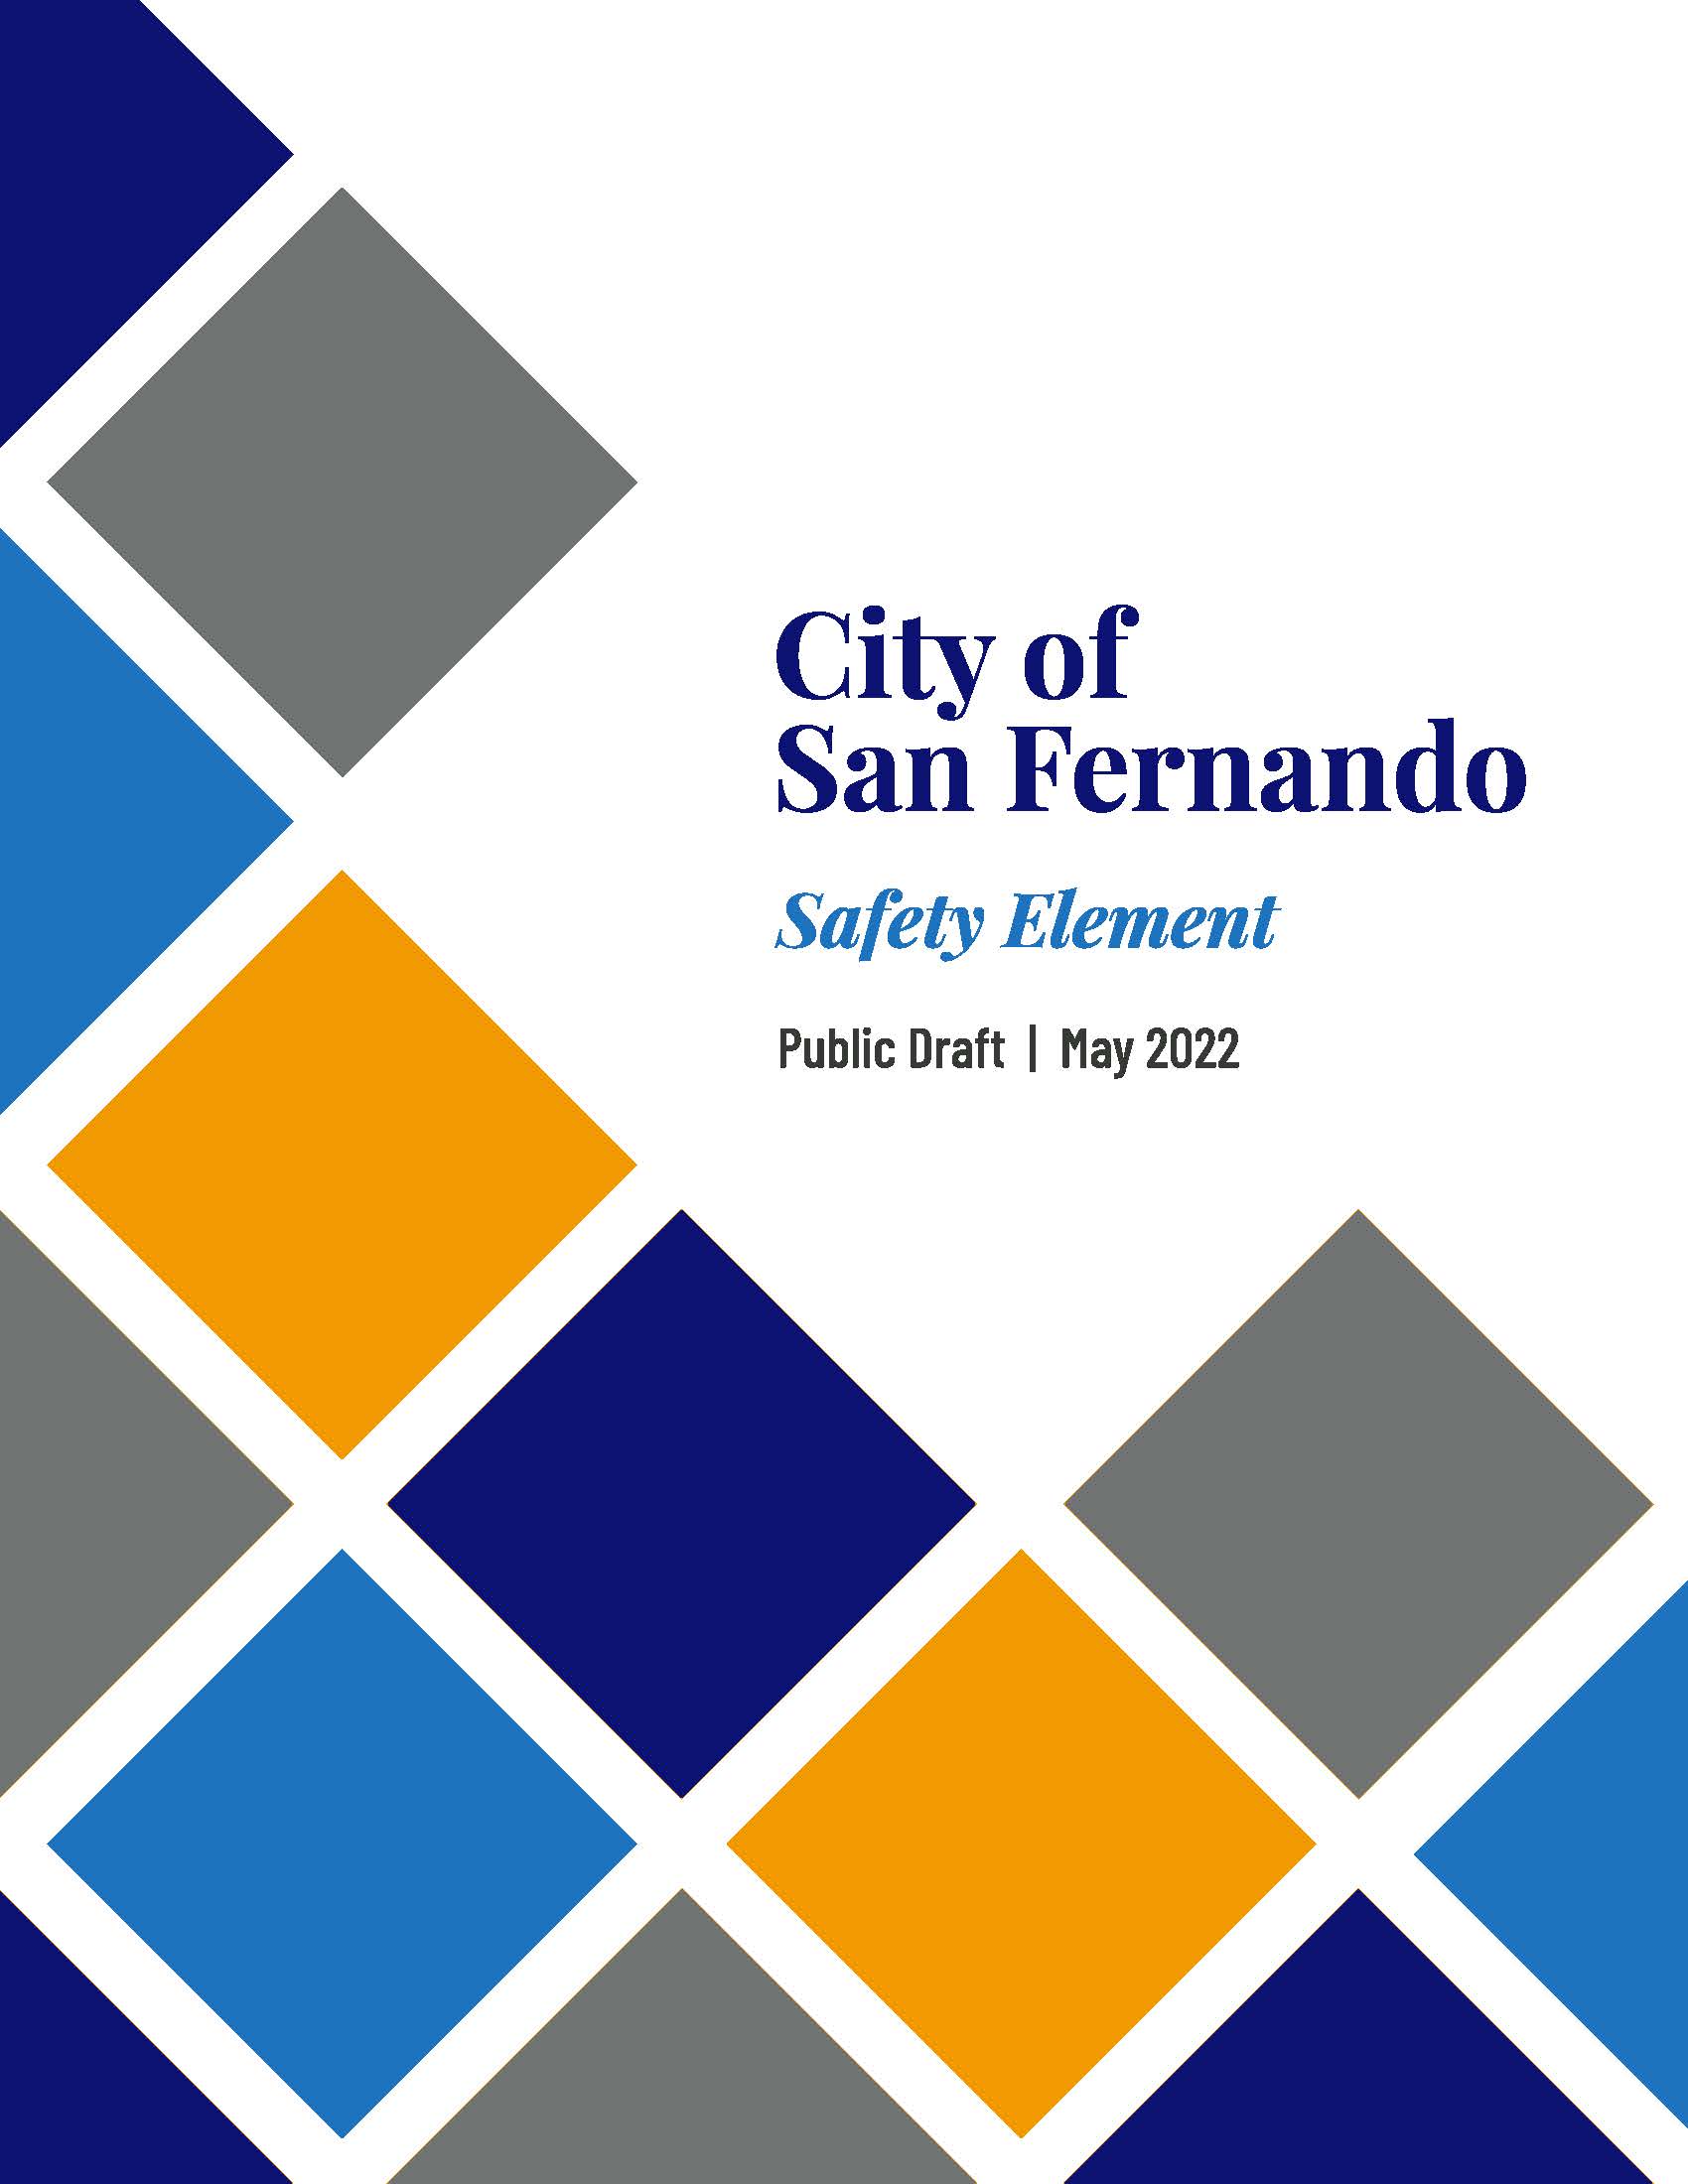 dark blue, light blue, orange and grey geometric pattern; City of San Fernando Safety Element Public Draft | May 2022